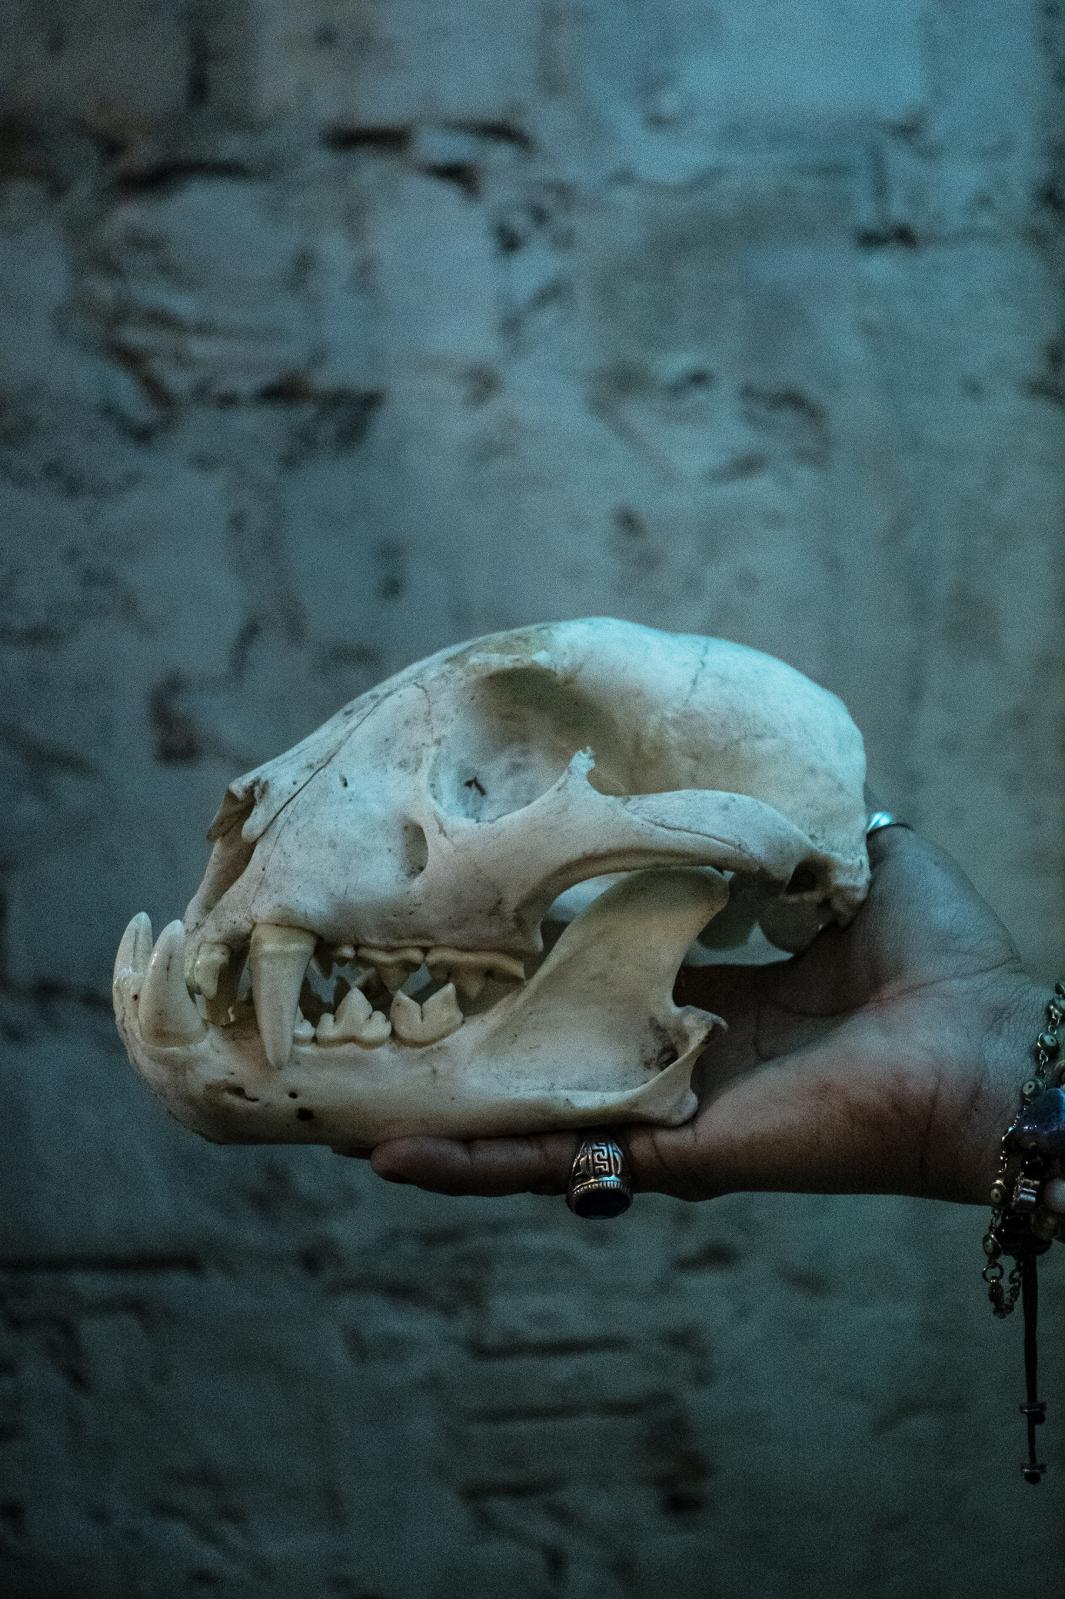 Amazonas ll - A Jaguar skull for sale in a market in Tabatinga, Brazil....